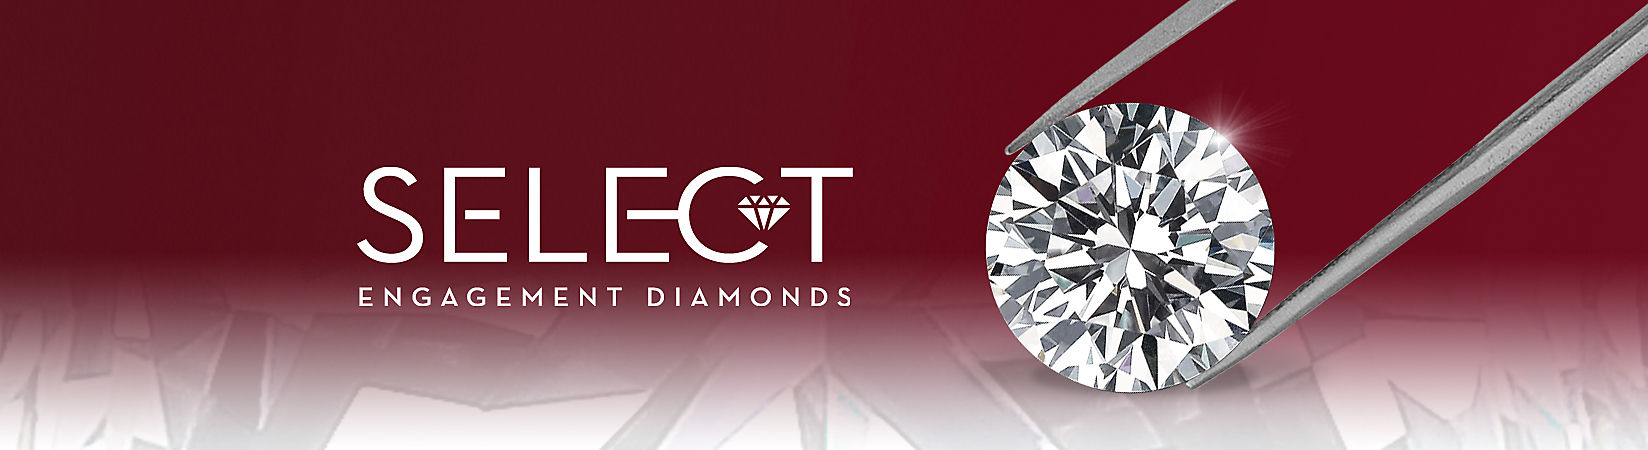 Select Diamond